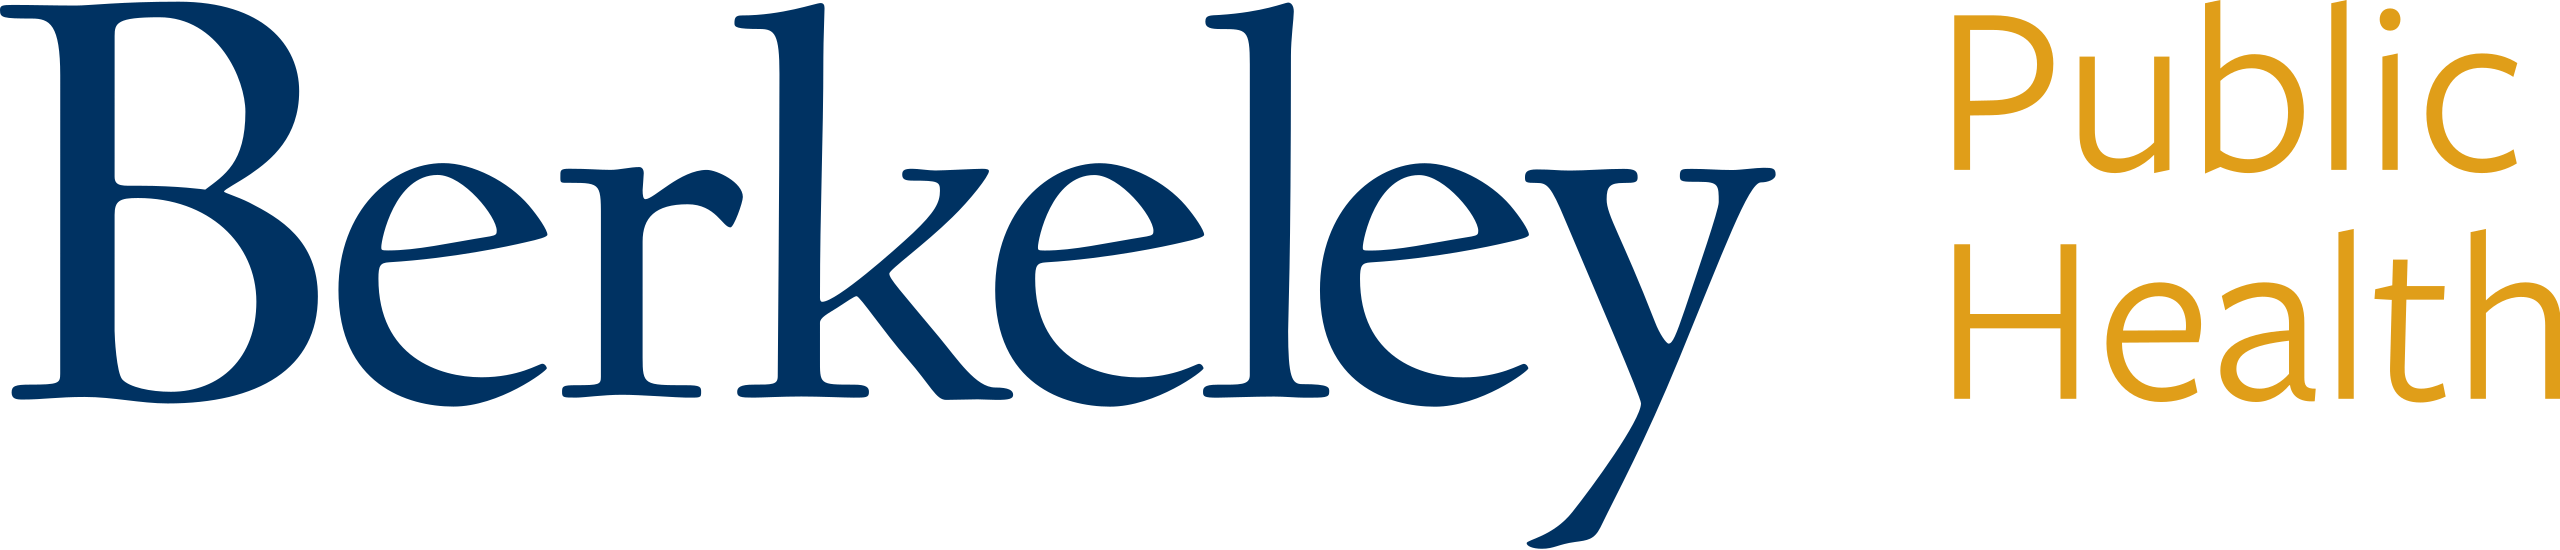 UC Berkeley Public Health logo.